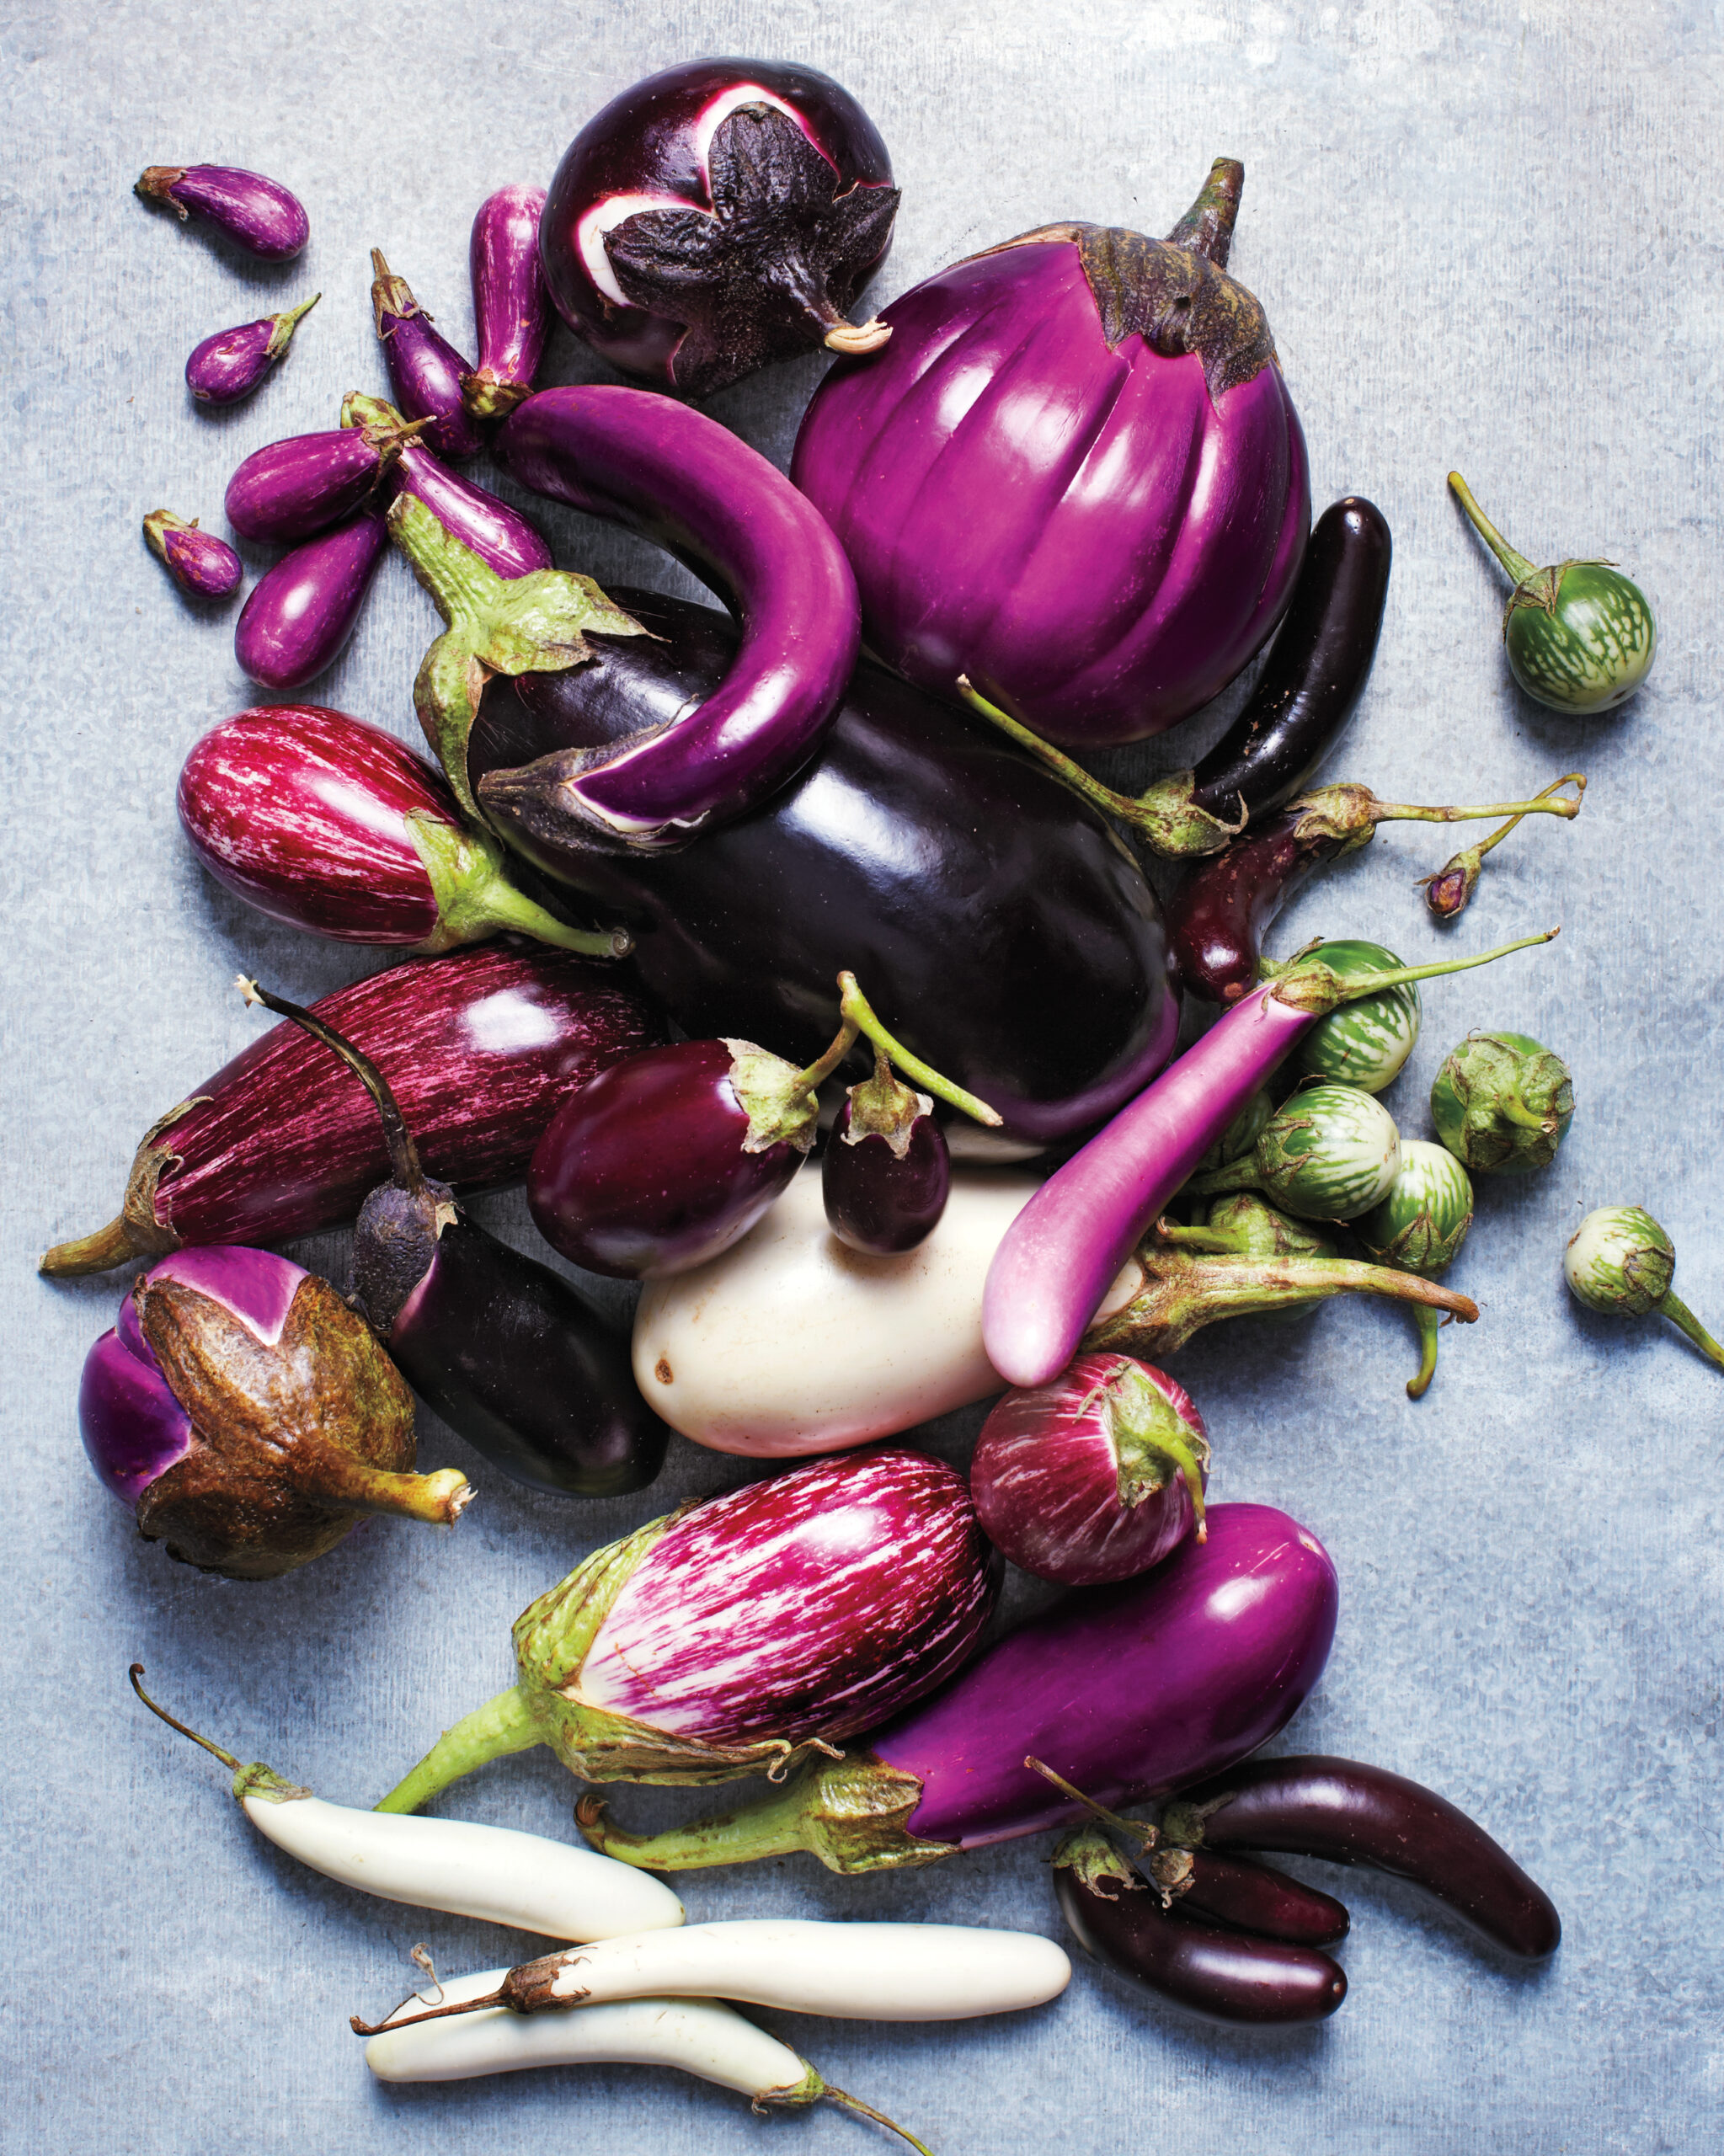 Eggplant Companion Plants to Try